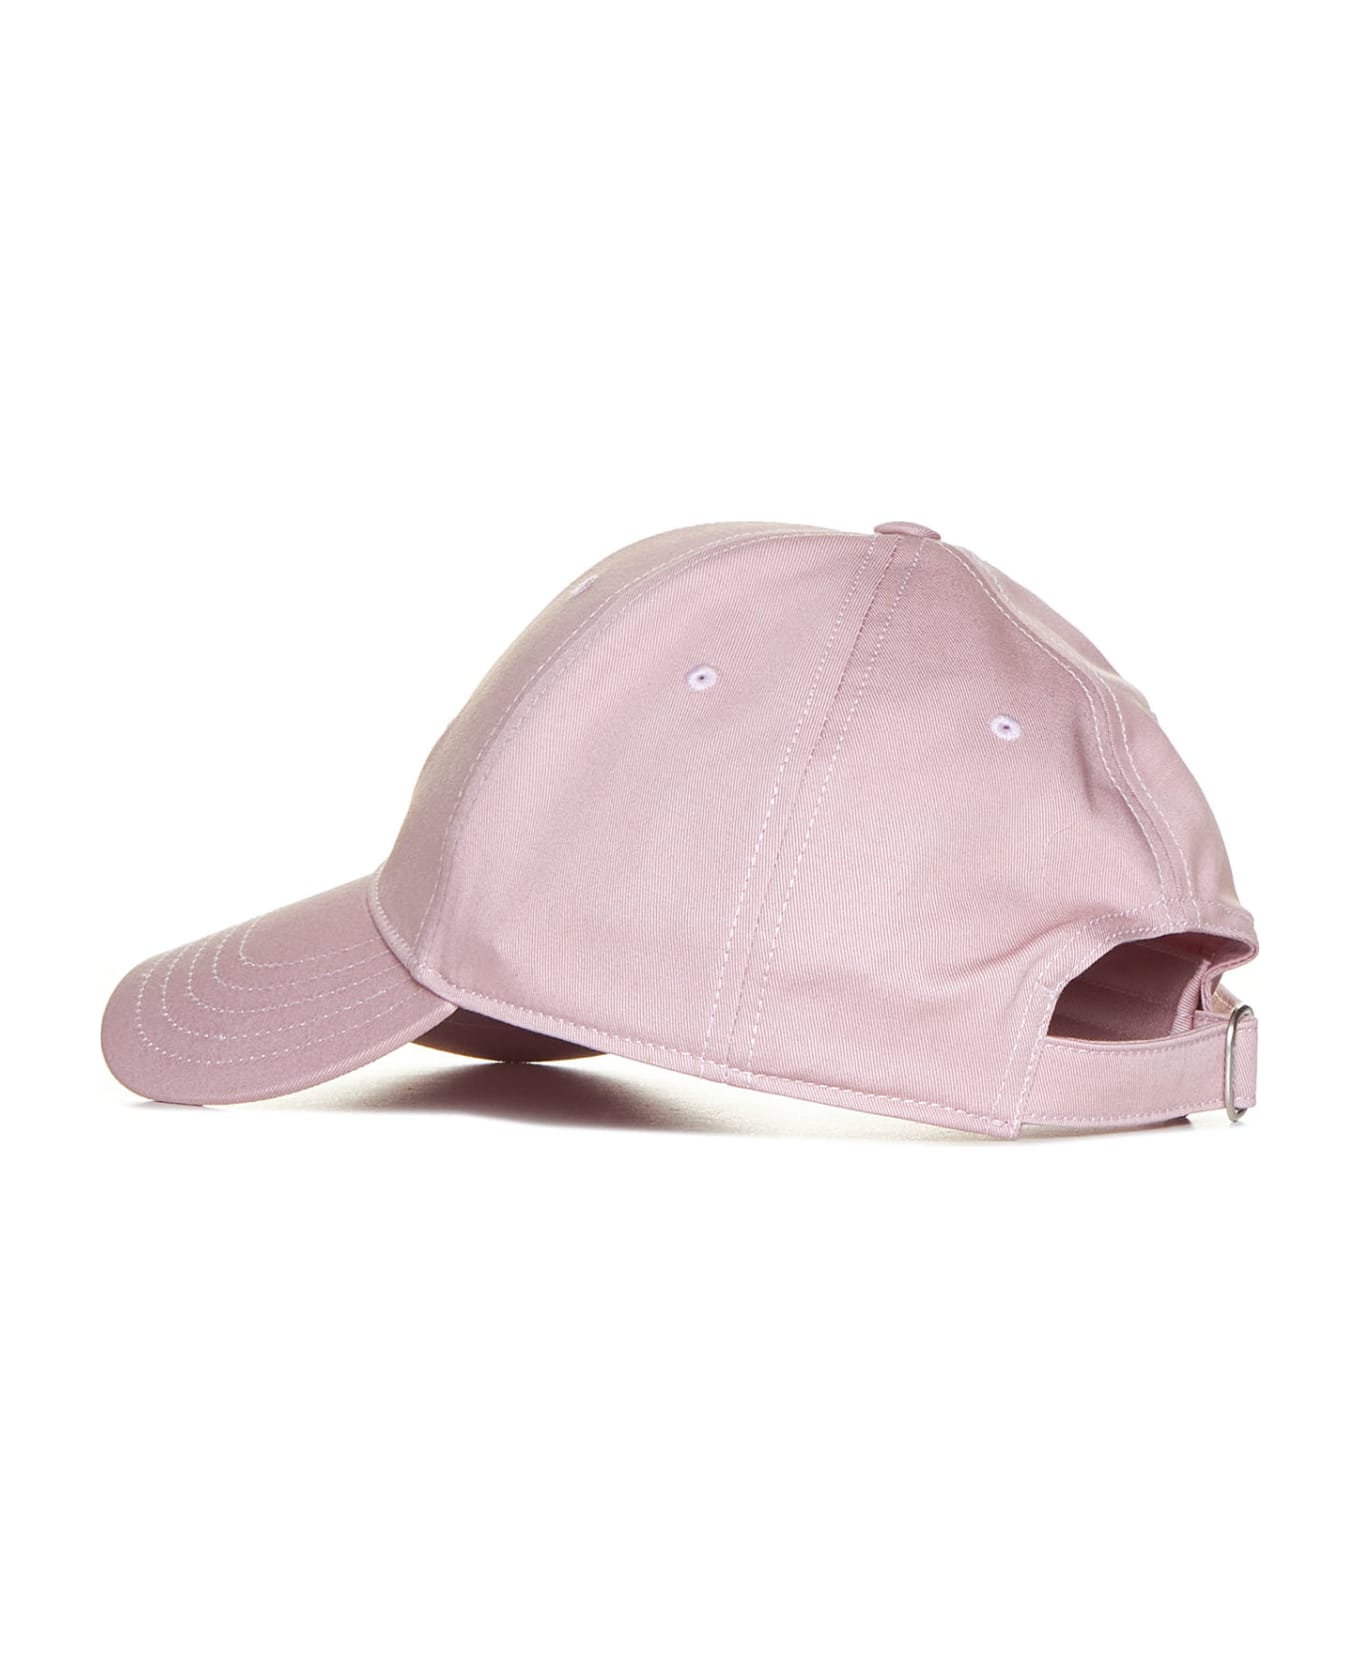 Off-White Baseball Cap - Pink 帽子